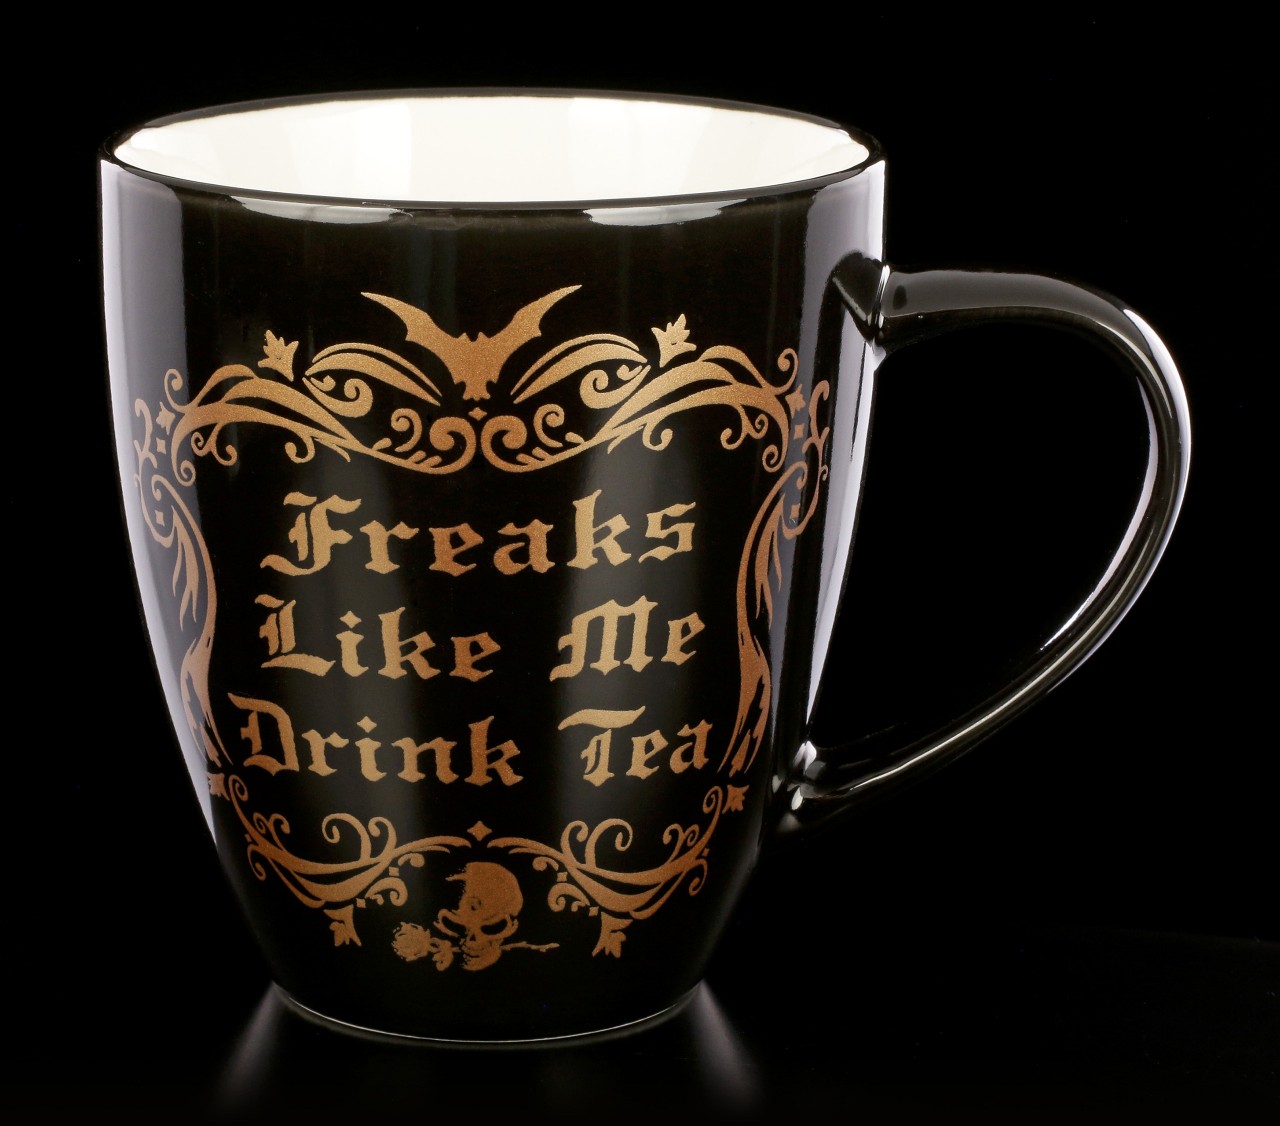 Alchemy Gothic Mug - Freaks Like Me Drink Tea